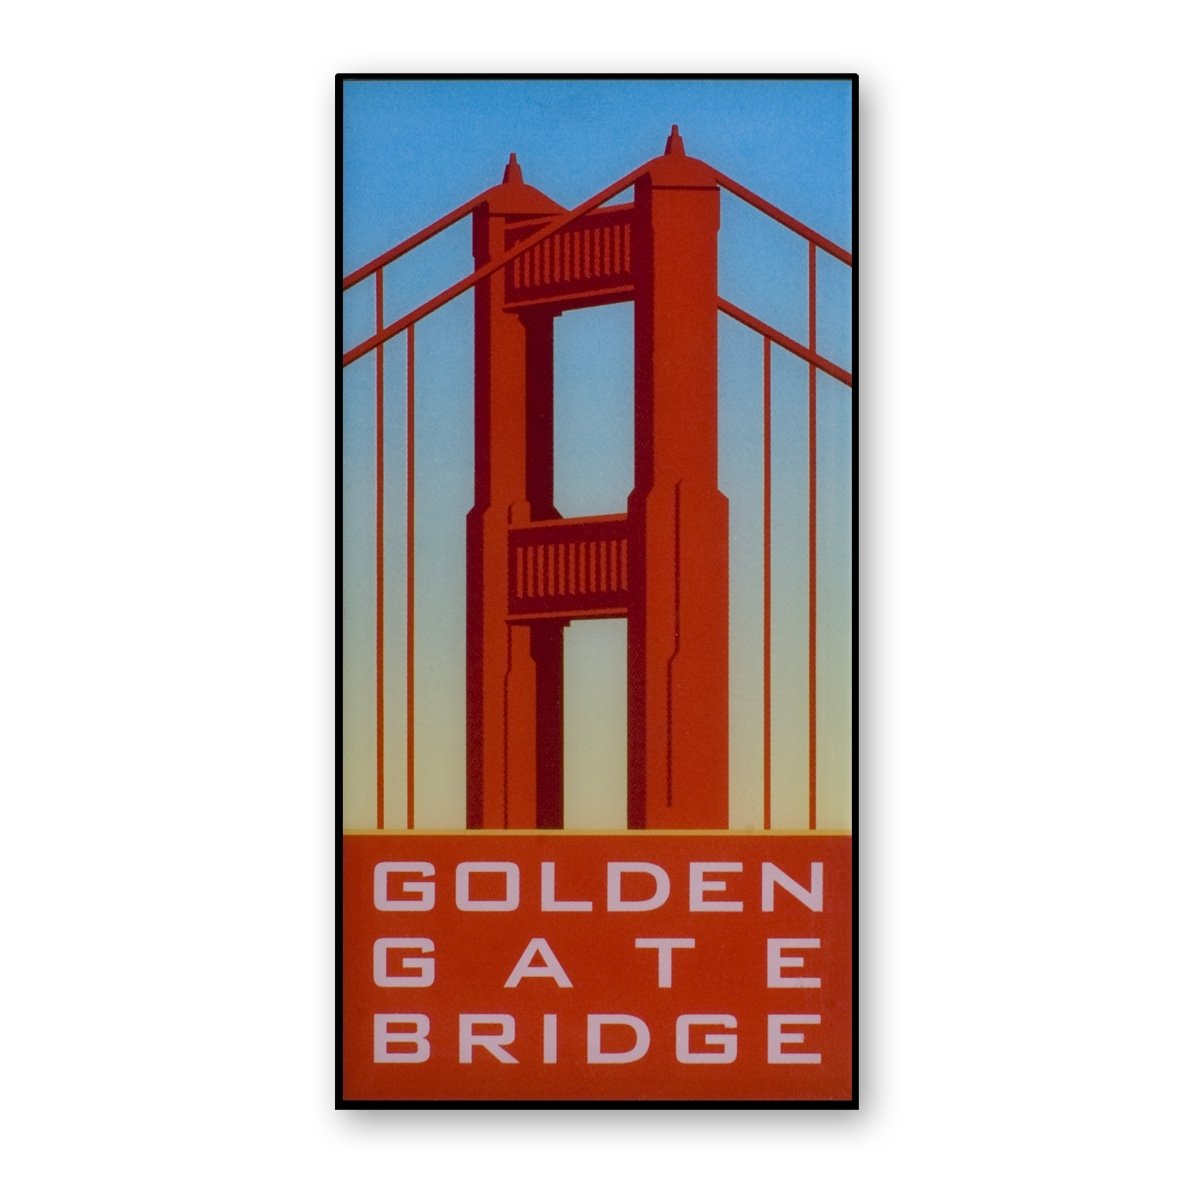 Multicolor metal souvenir magnet featuring vintage-inspired design of San Francisco's Golden Gate Bridge Art Deco towers.